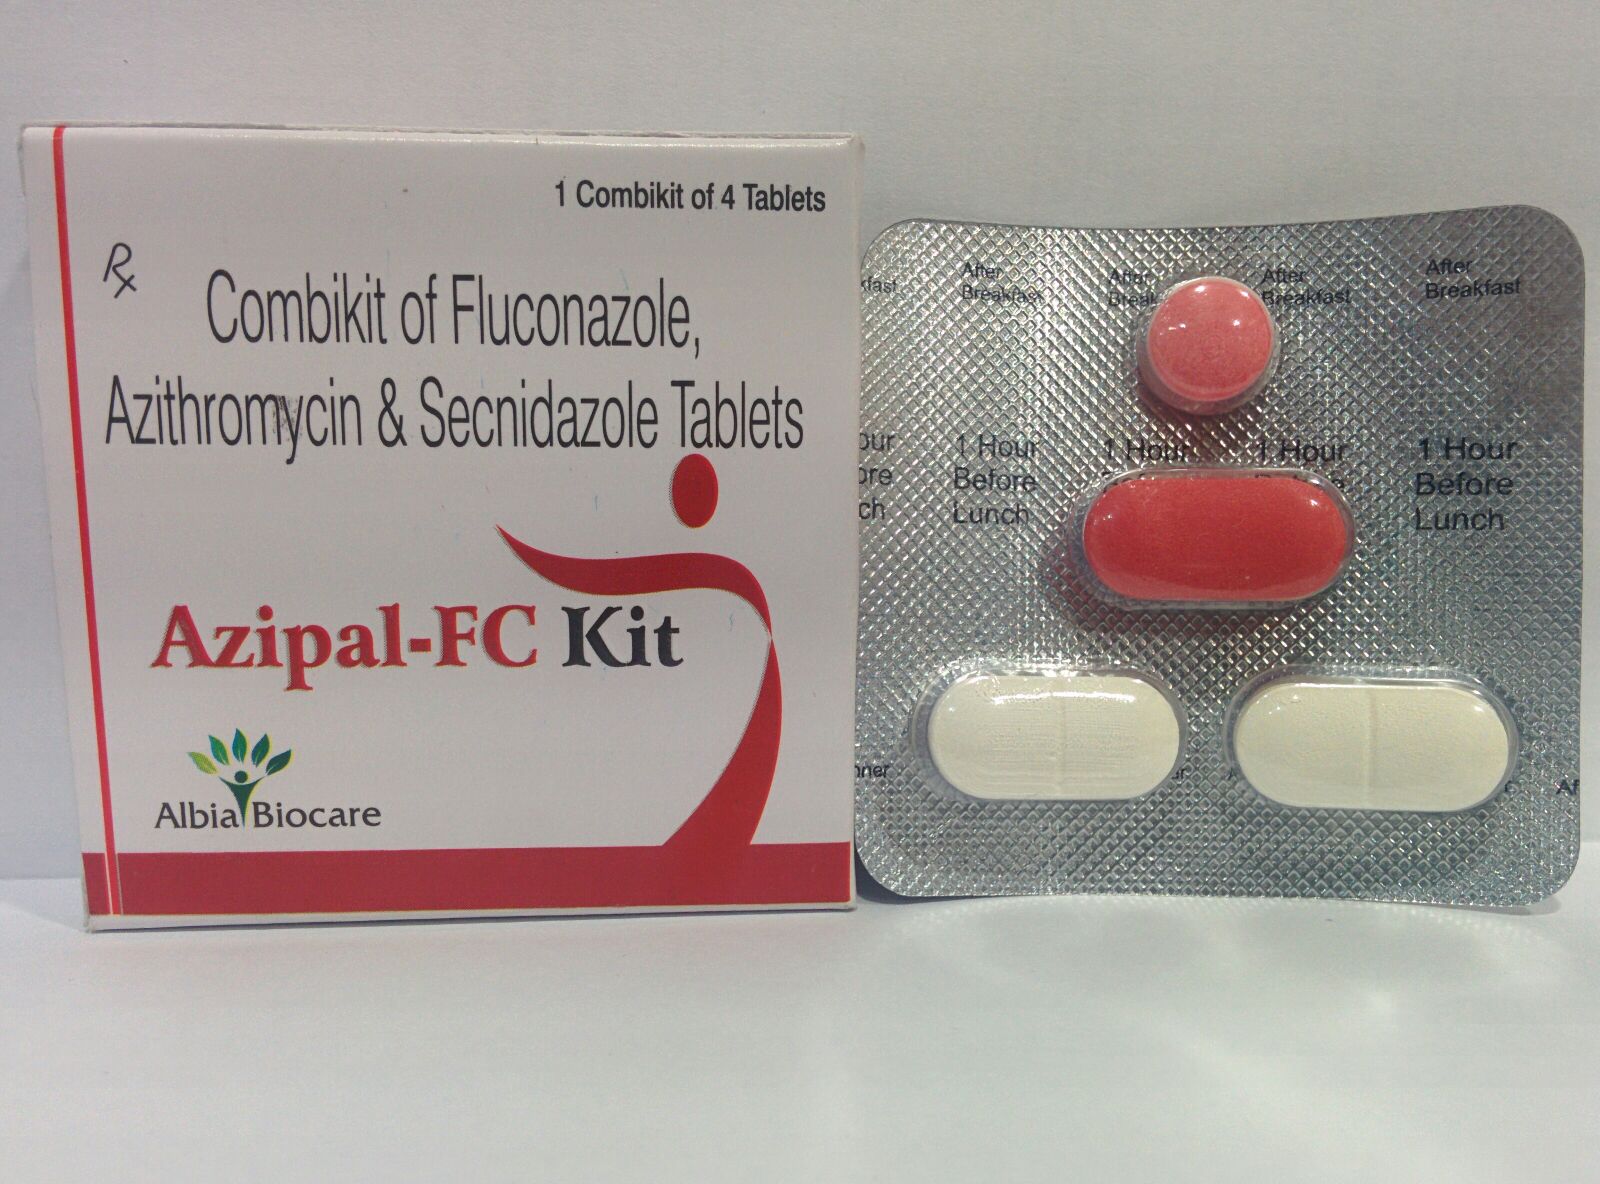 AZIPAL-FC KIT | Azithromycin 500mg (2 Tab) + Fluconazole 150 mg  (1 Tab) + Secnidazole (1 Tab)